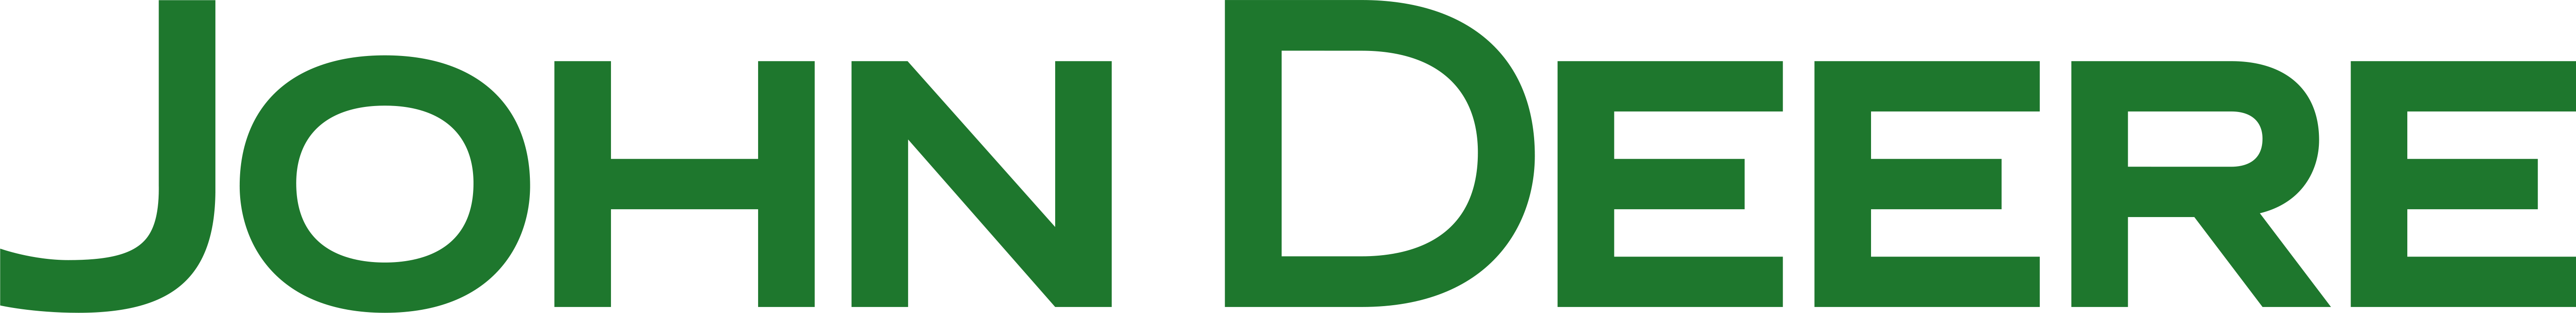 John Deere - John Deere Logo Png (5620x682)